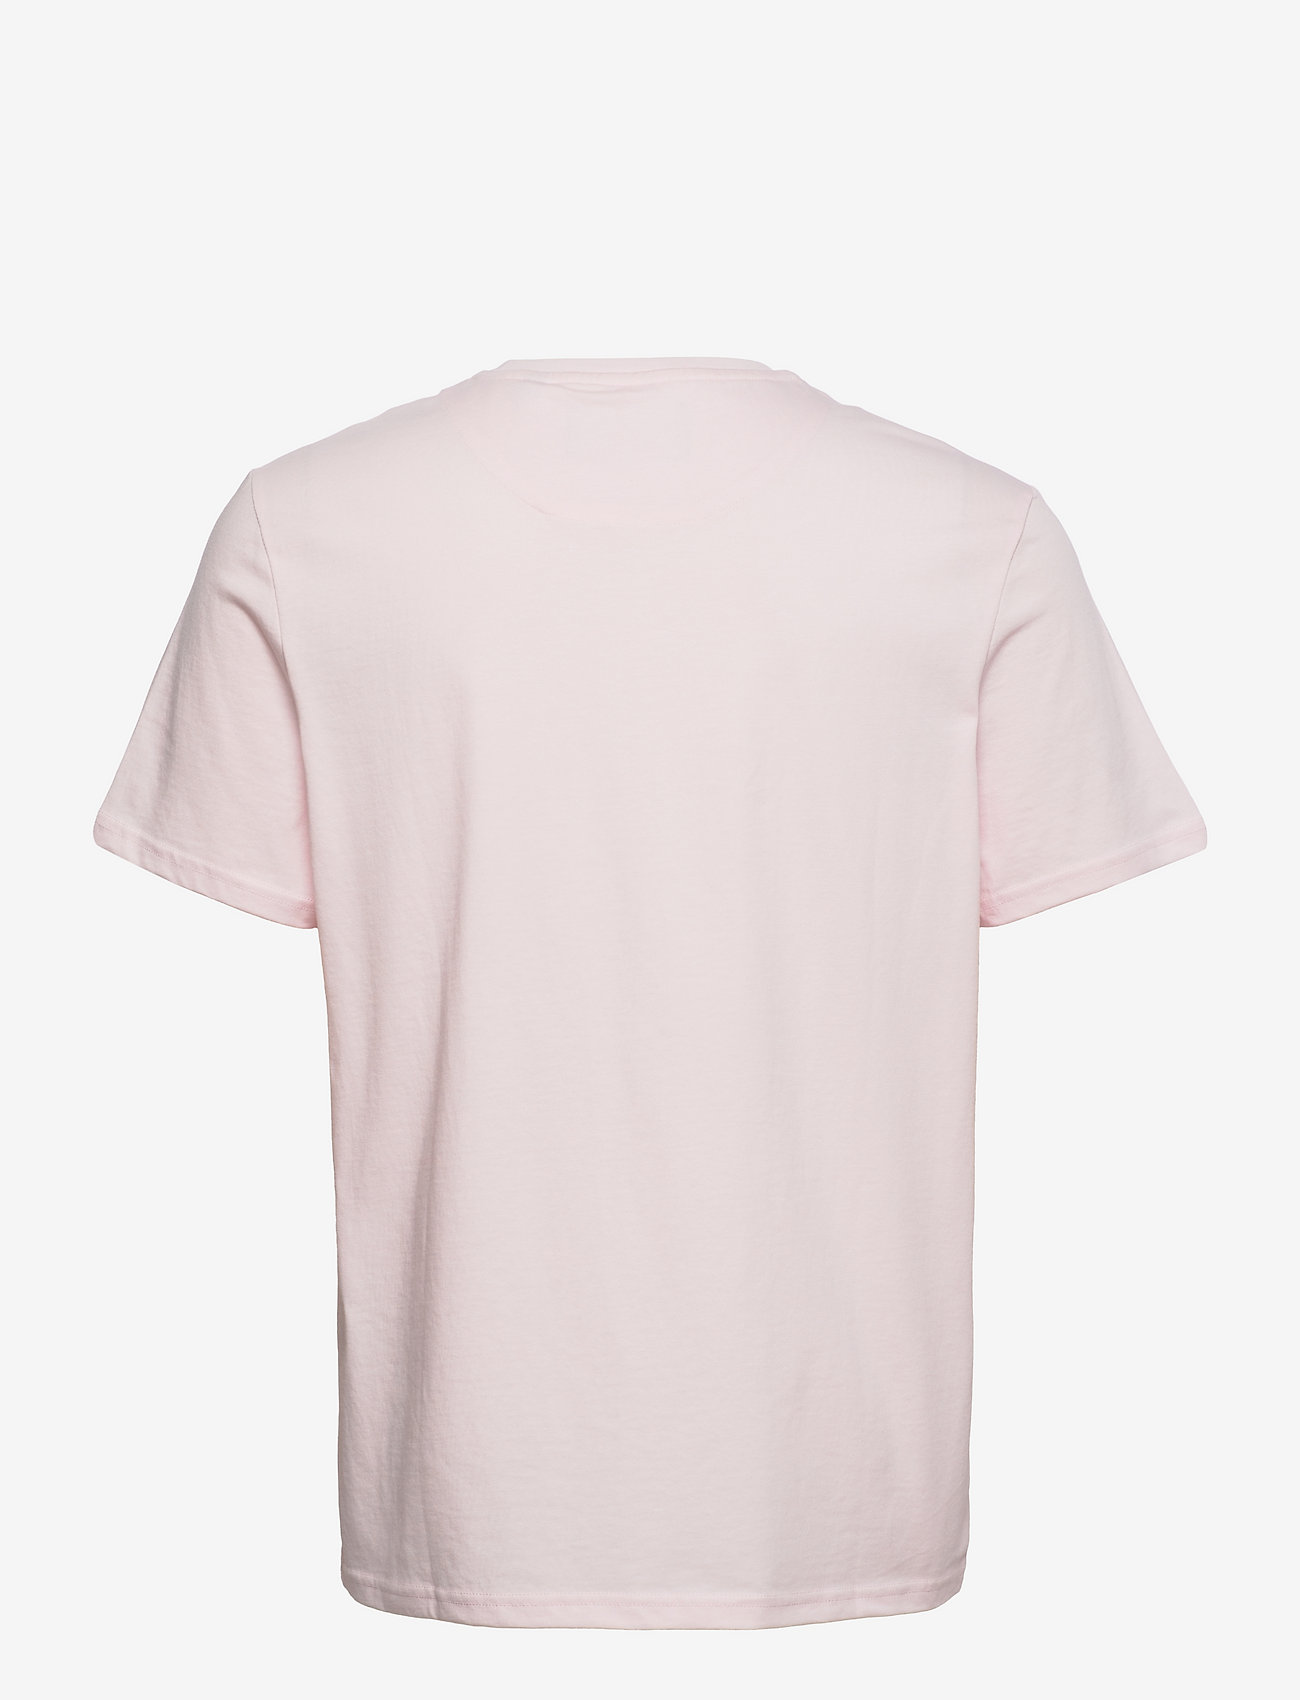 Lyle & Scott - Plain T-Shirt - t-shirts - light pink - 1